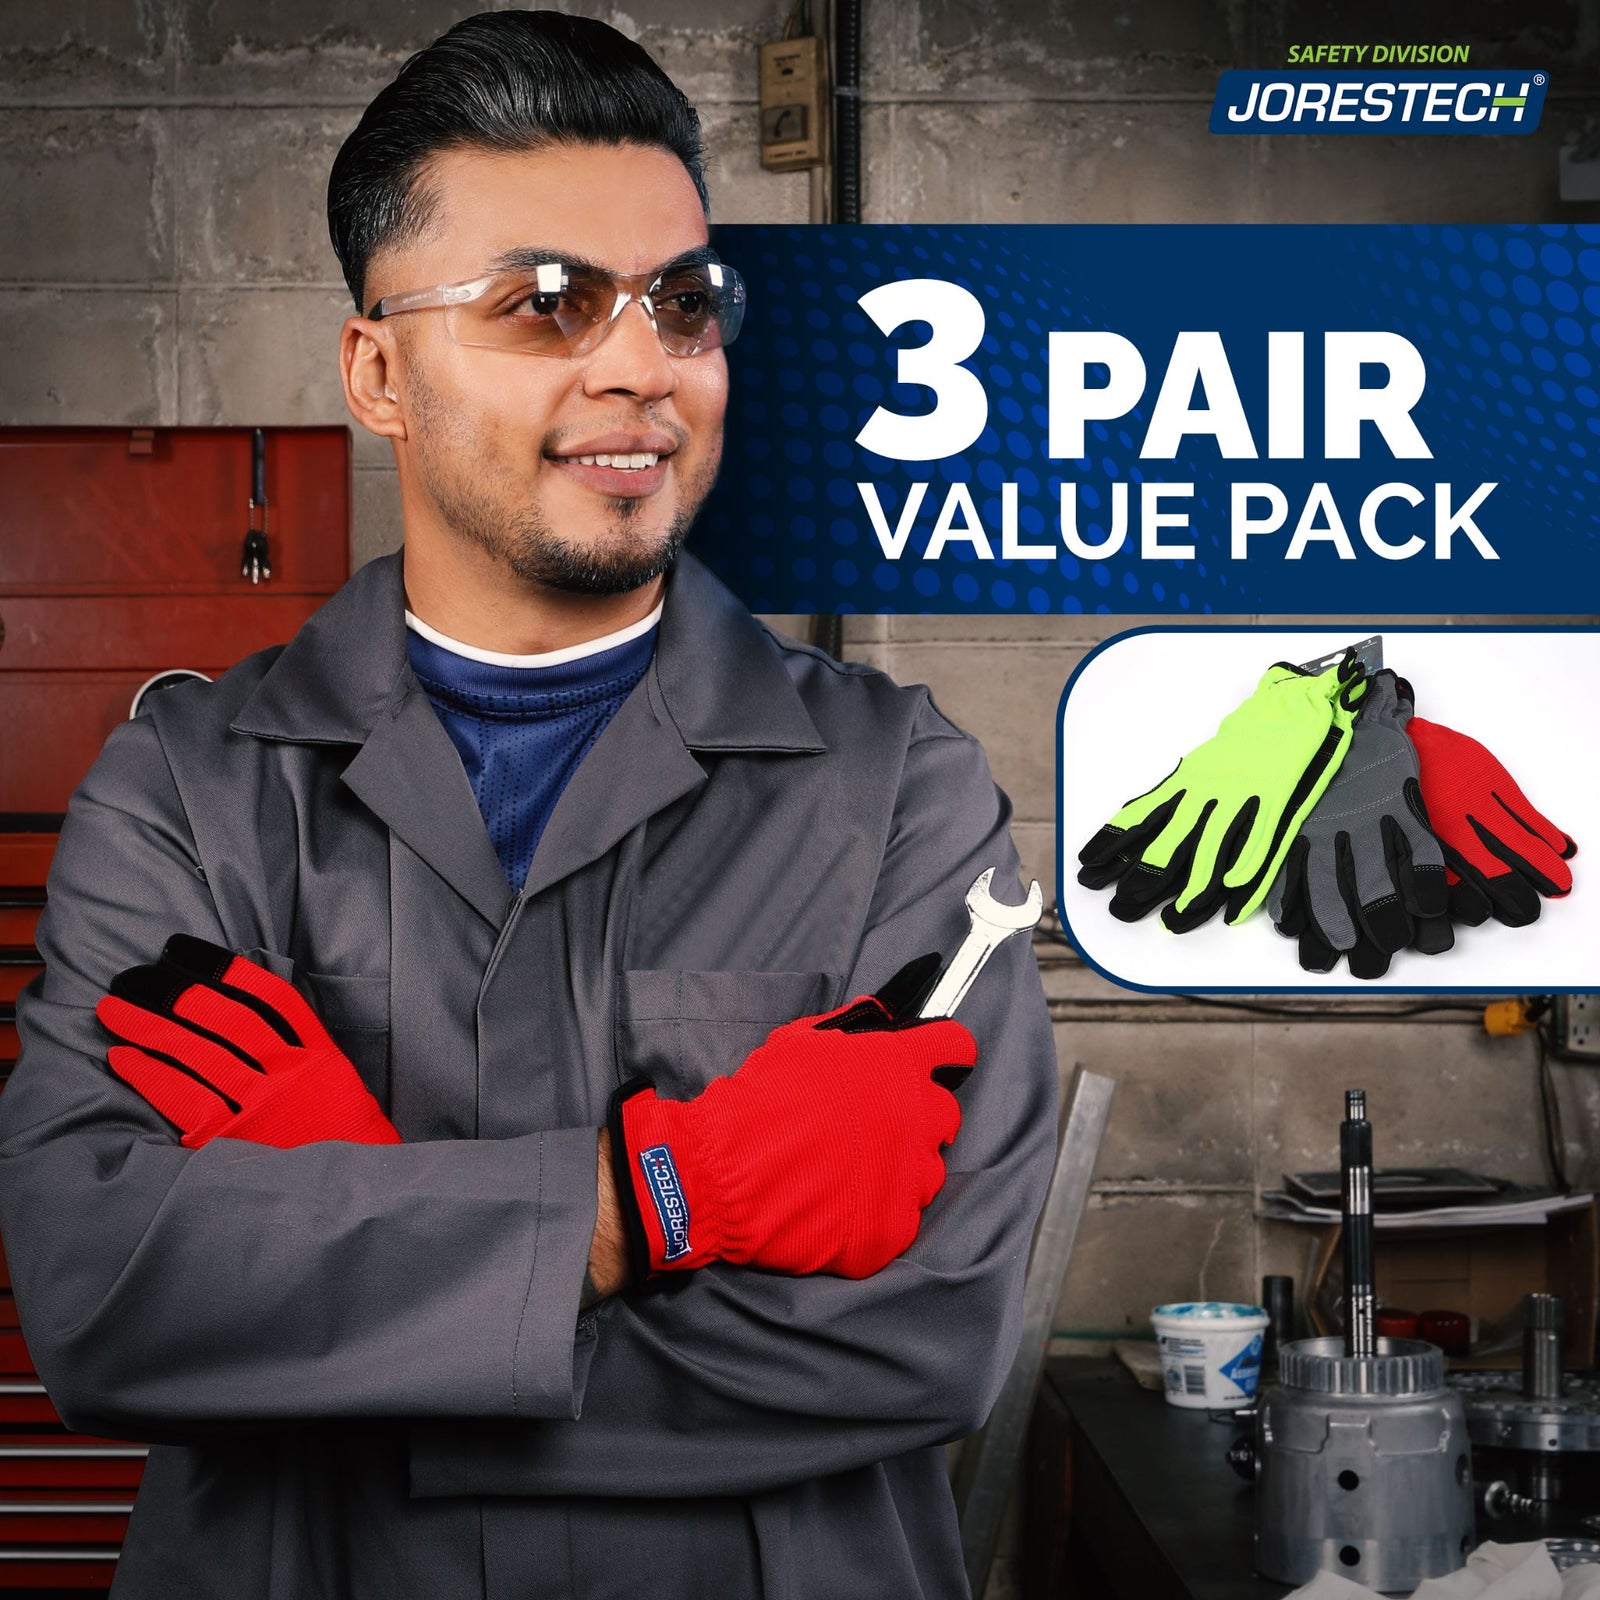 JORESTECH High Visibility Safety Touch Screen Technology Multipurpose Fleece Lined Winter Work Gloves